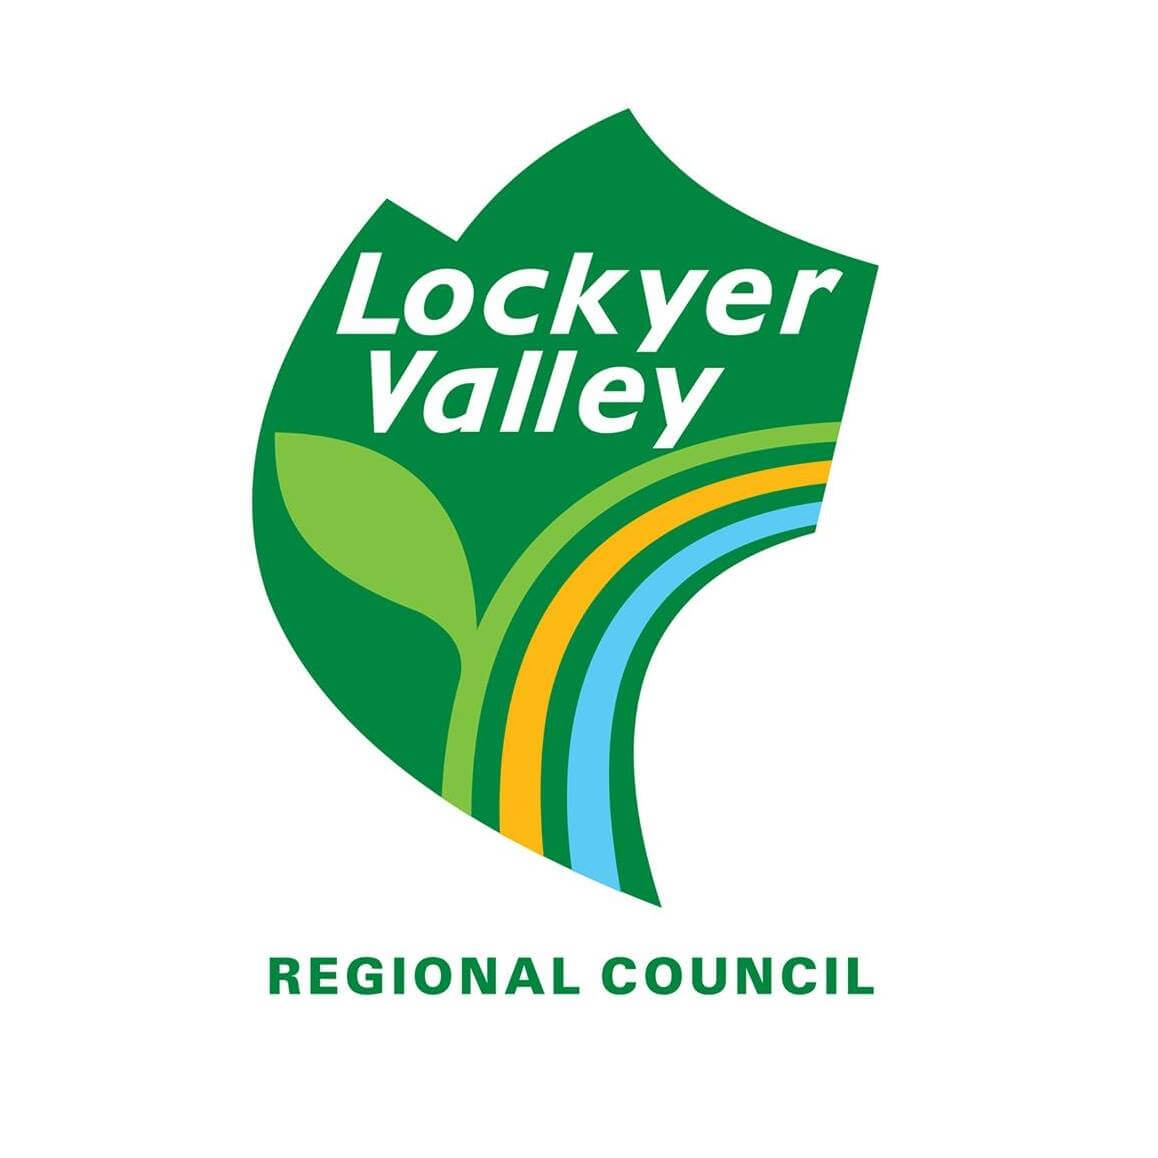 Lockyer valley regional council logo